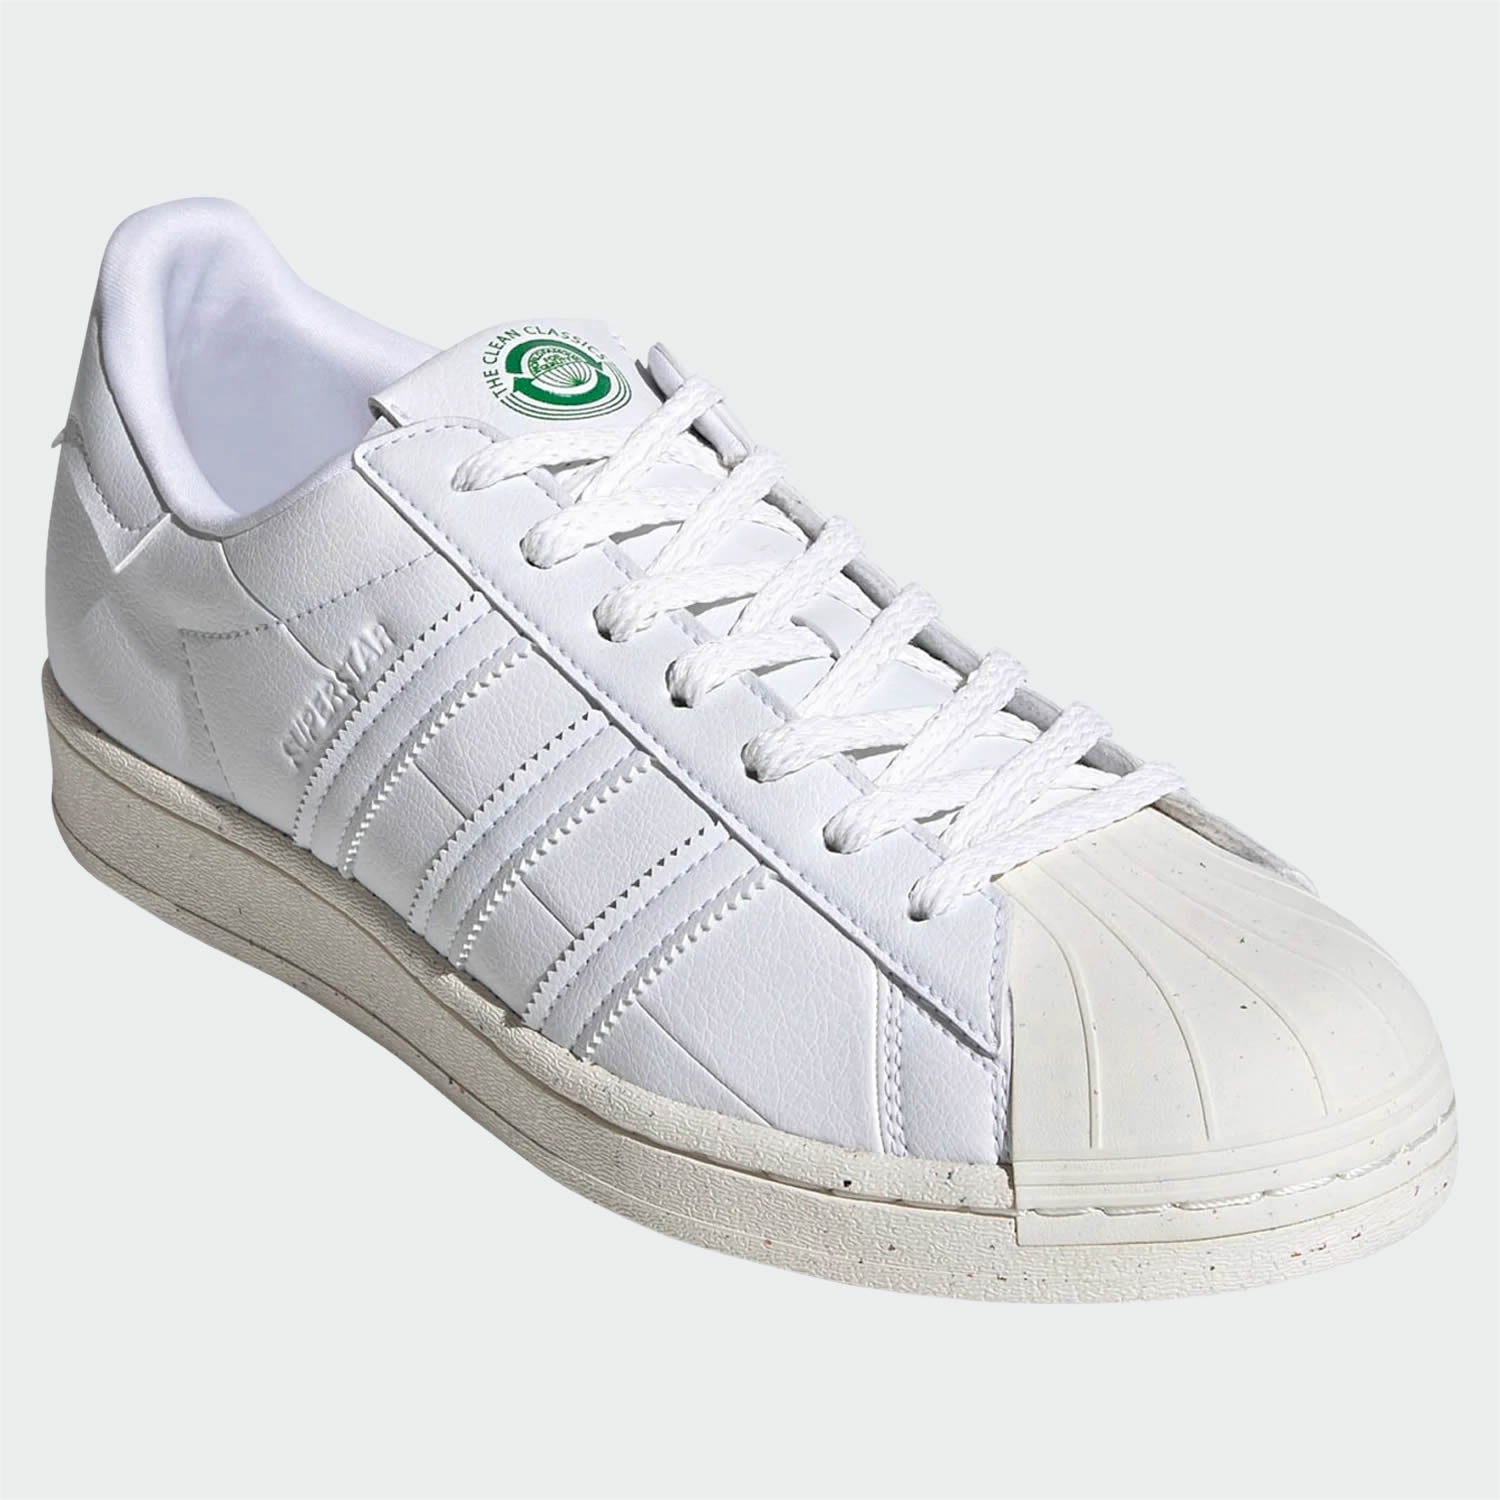 tradesports.co.uk Adidas Originals Men's Vegan Superstar Shoes - White